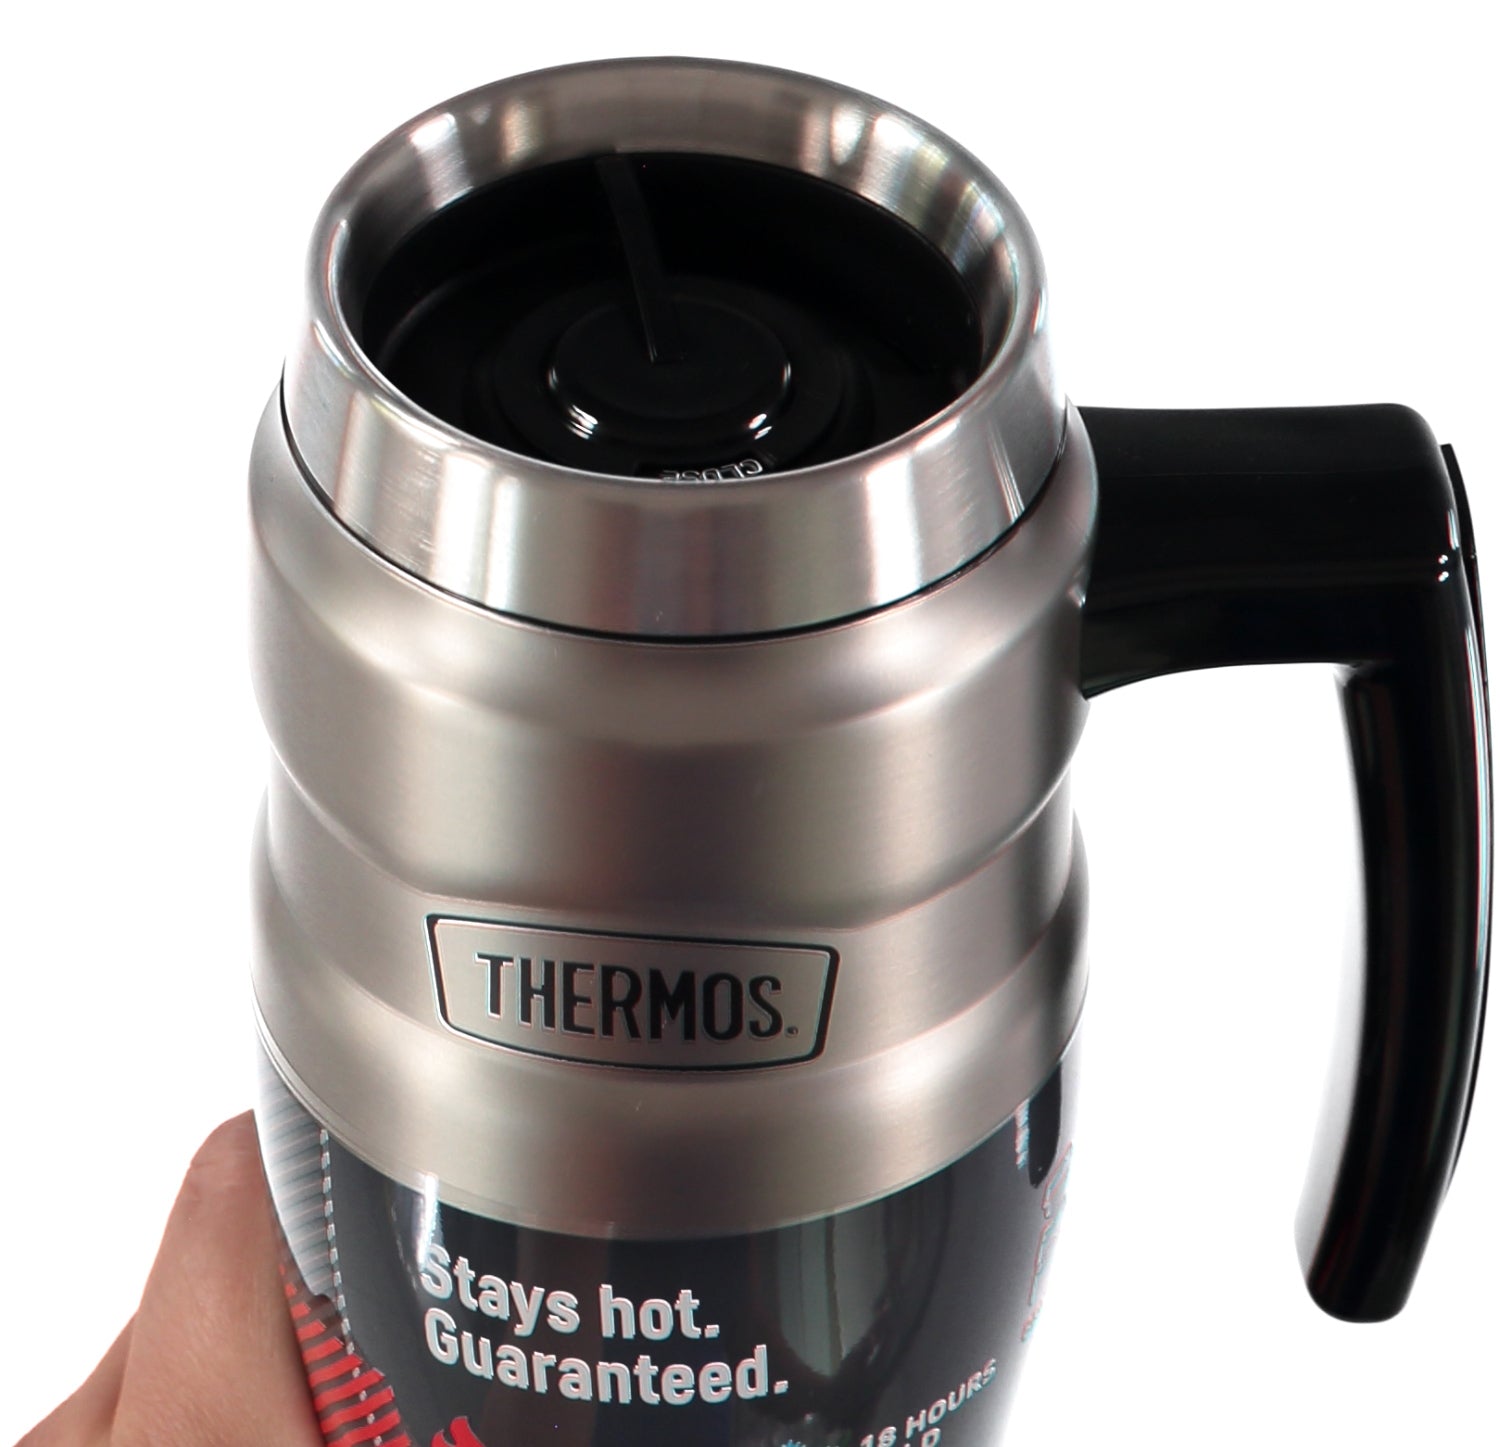 Thermos Travel Mug, 16 Ounce